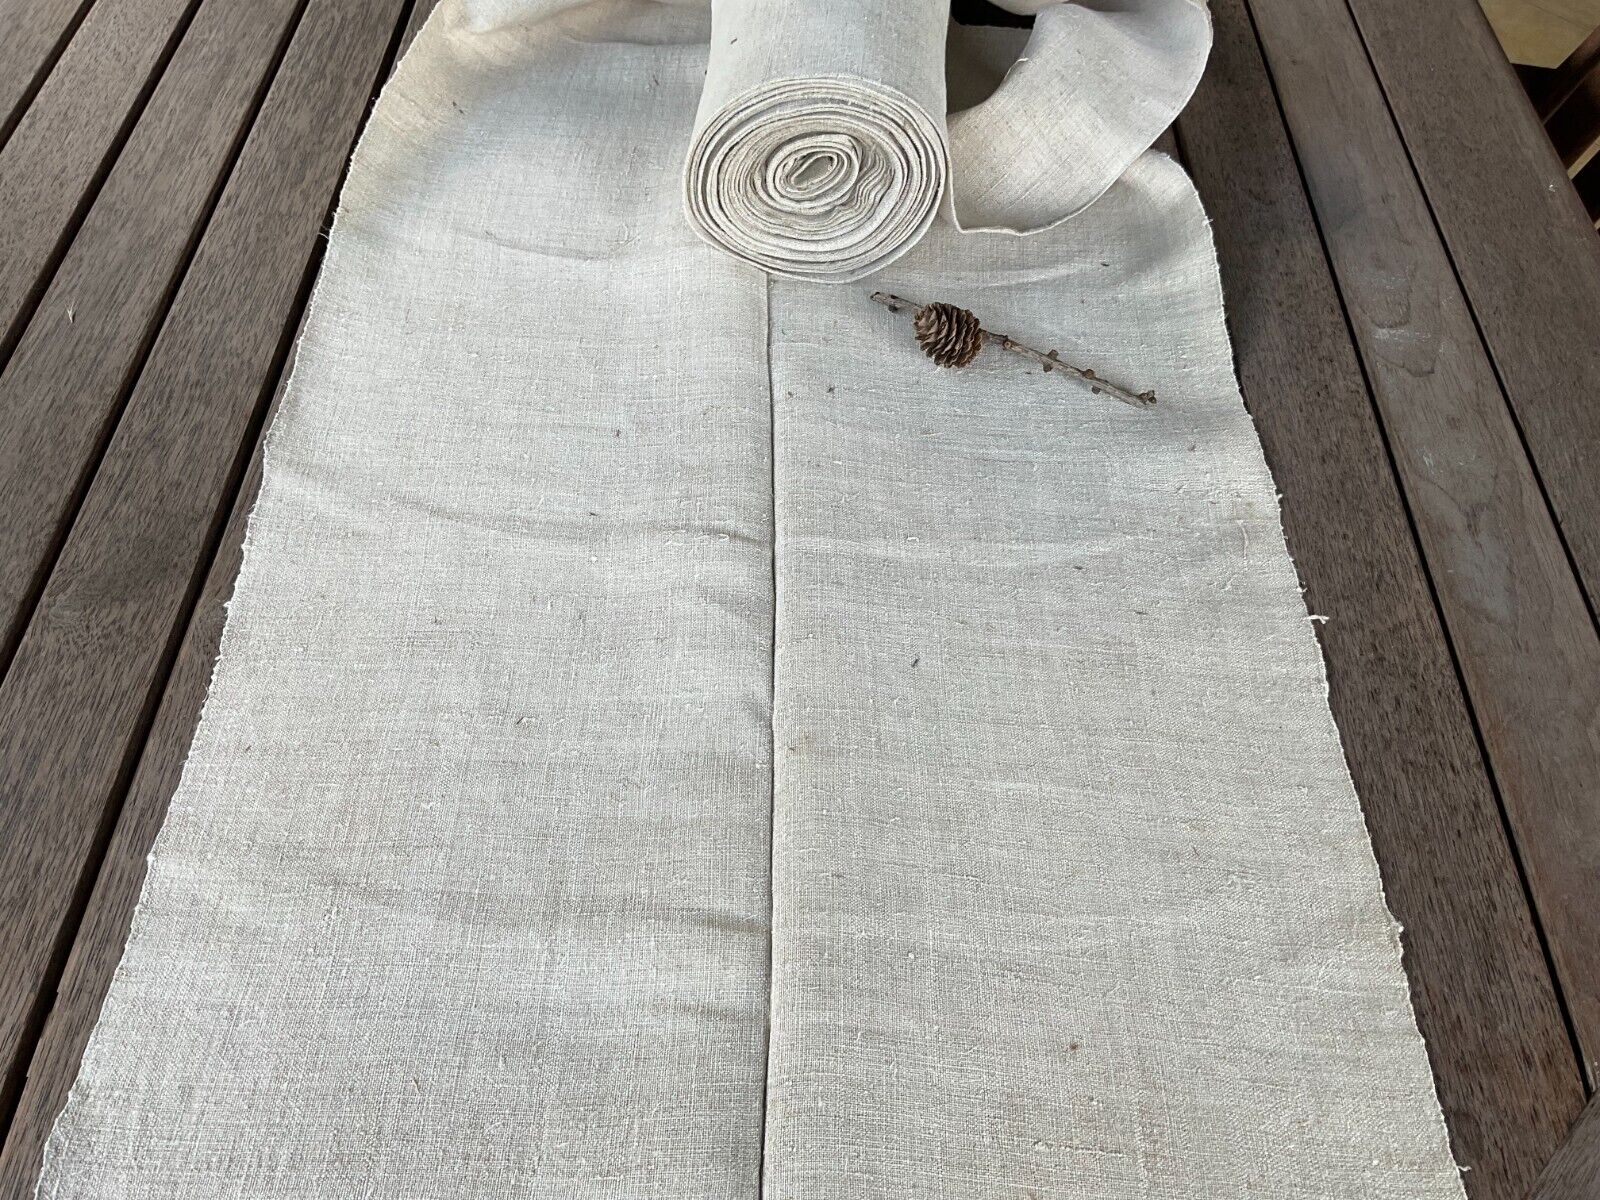 Antique Handwoven Hemp Fabric Old European Homespun Textile Primitive Roll 6 yd